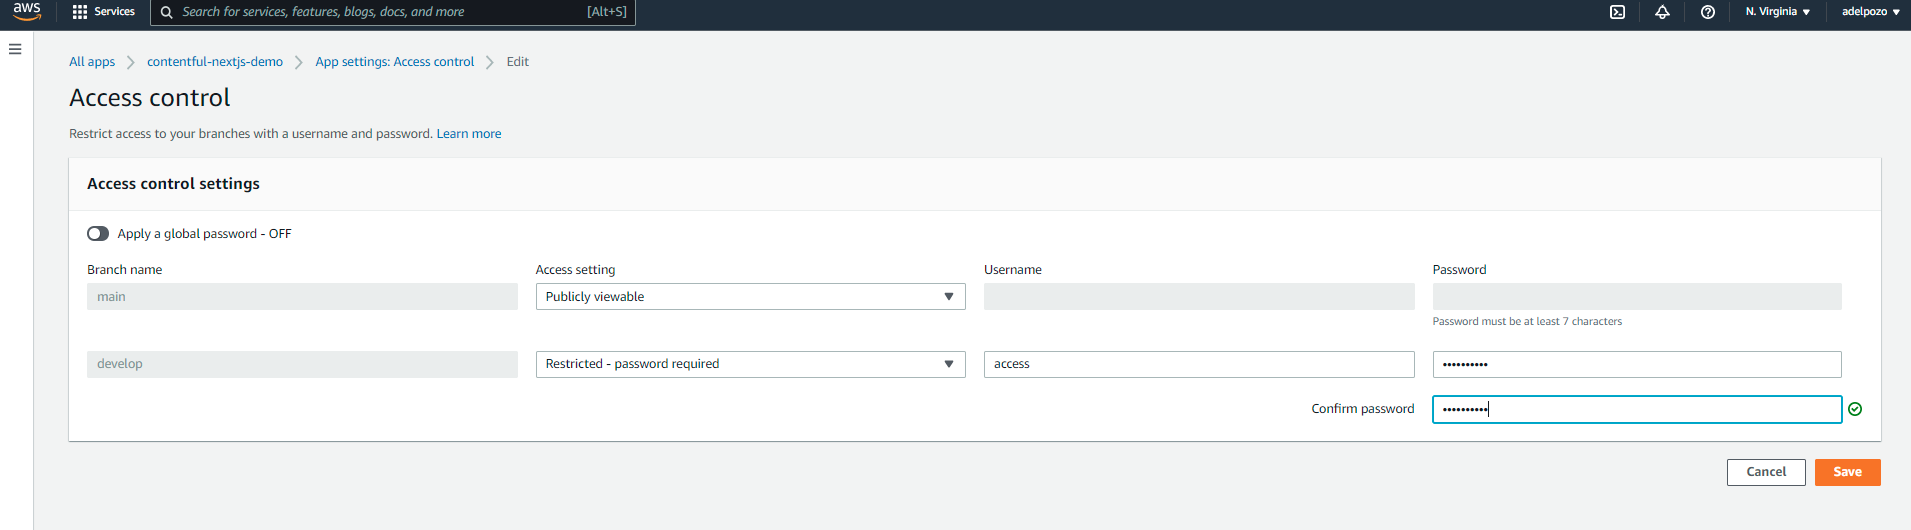 AWS Amplify Contentful NextJS tutorial access control screenshot